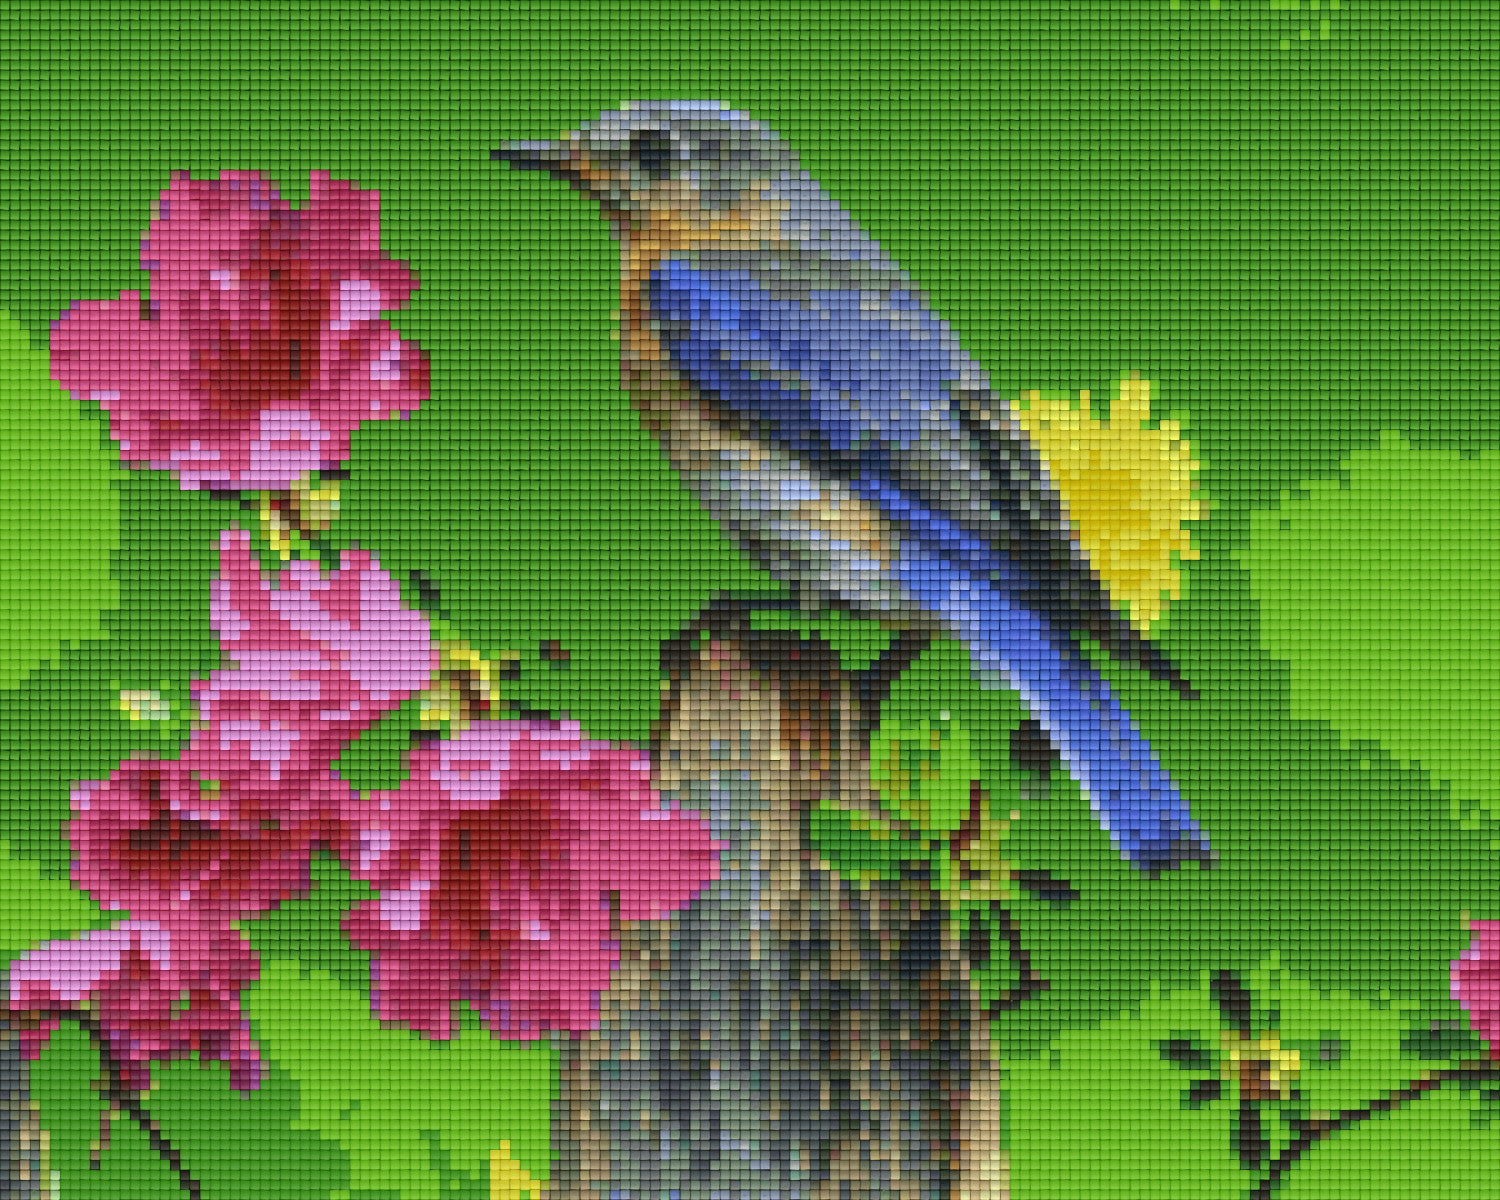 Pixelhobby Klassik Vorlage - Blauer Vogel